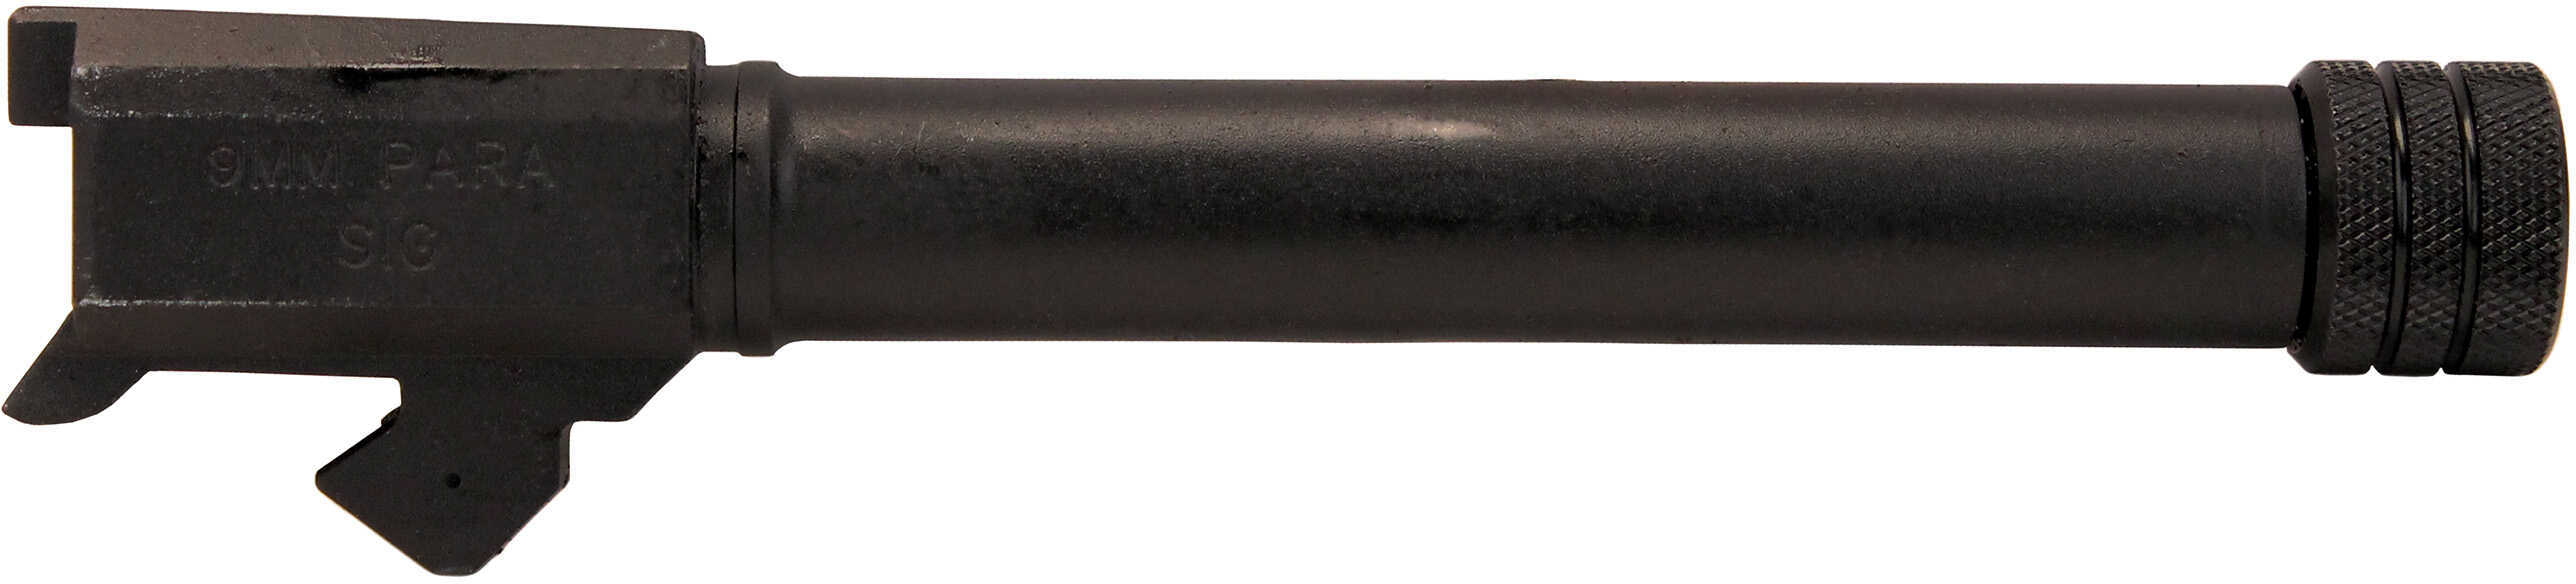 SigTac Barrel Thread Cap 226 9 126mm Chrome/Phosphate Coated